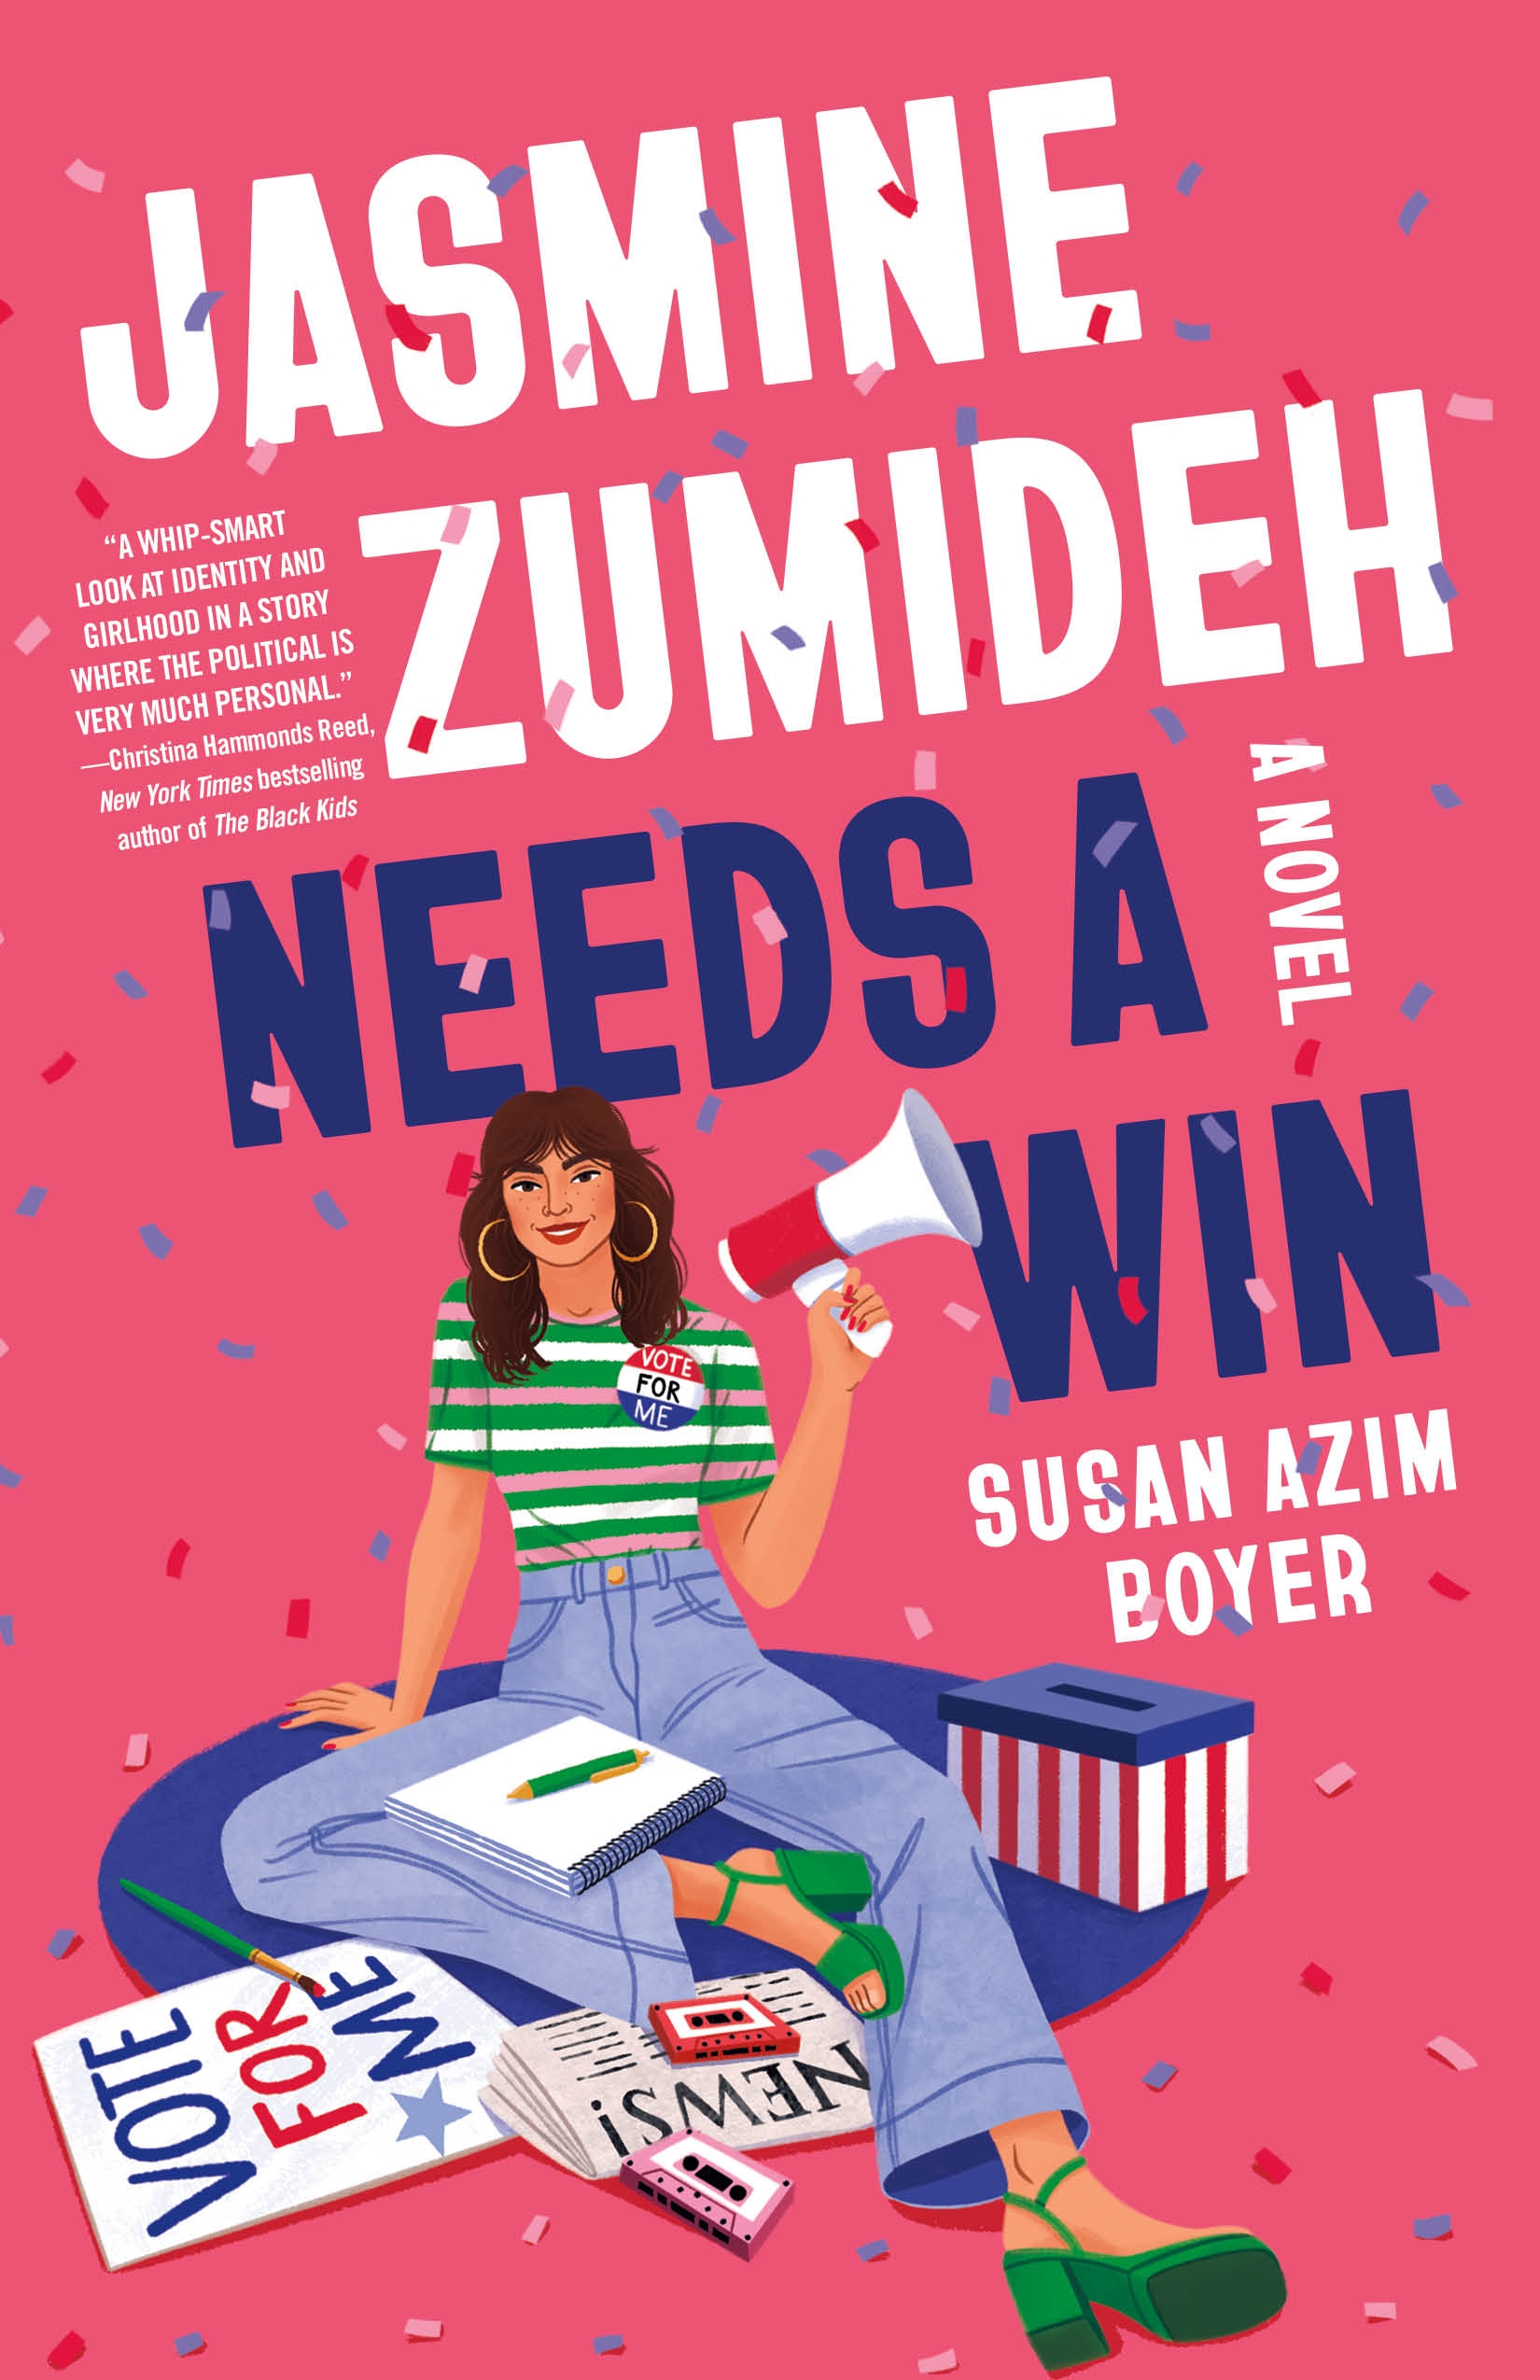 Jasmine Zumideh Needs a Win cover image